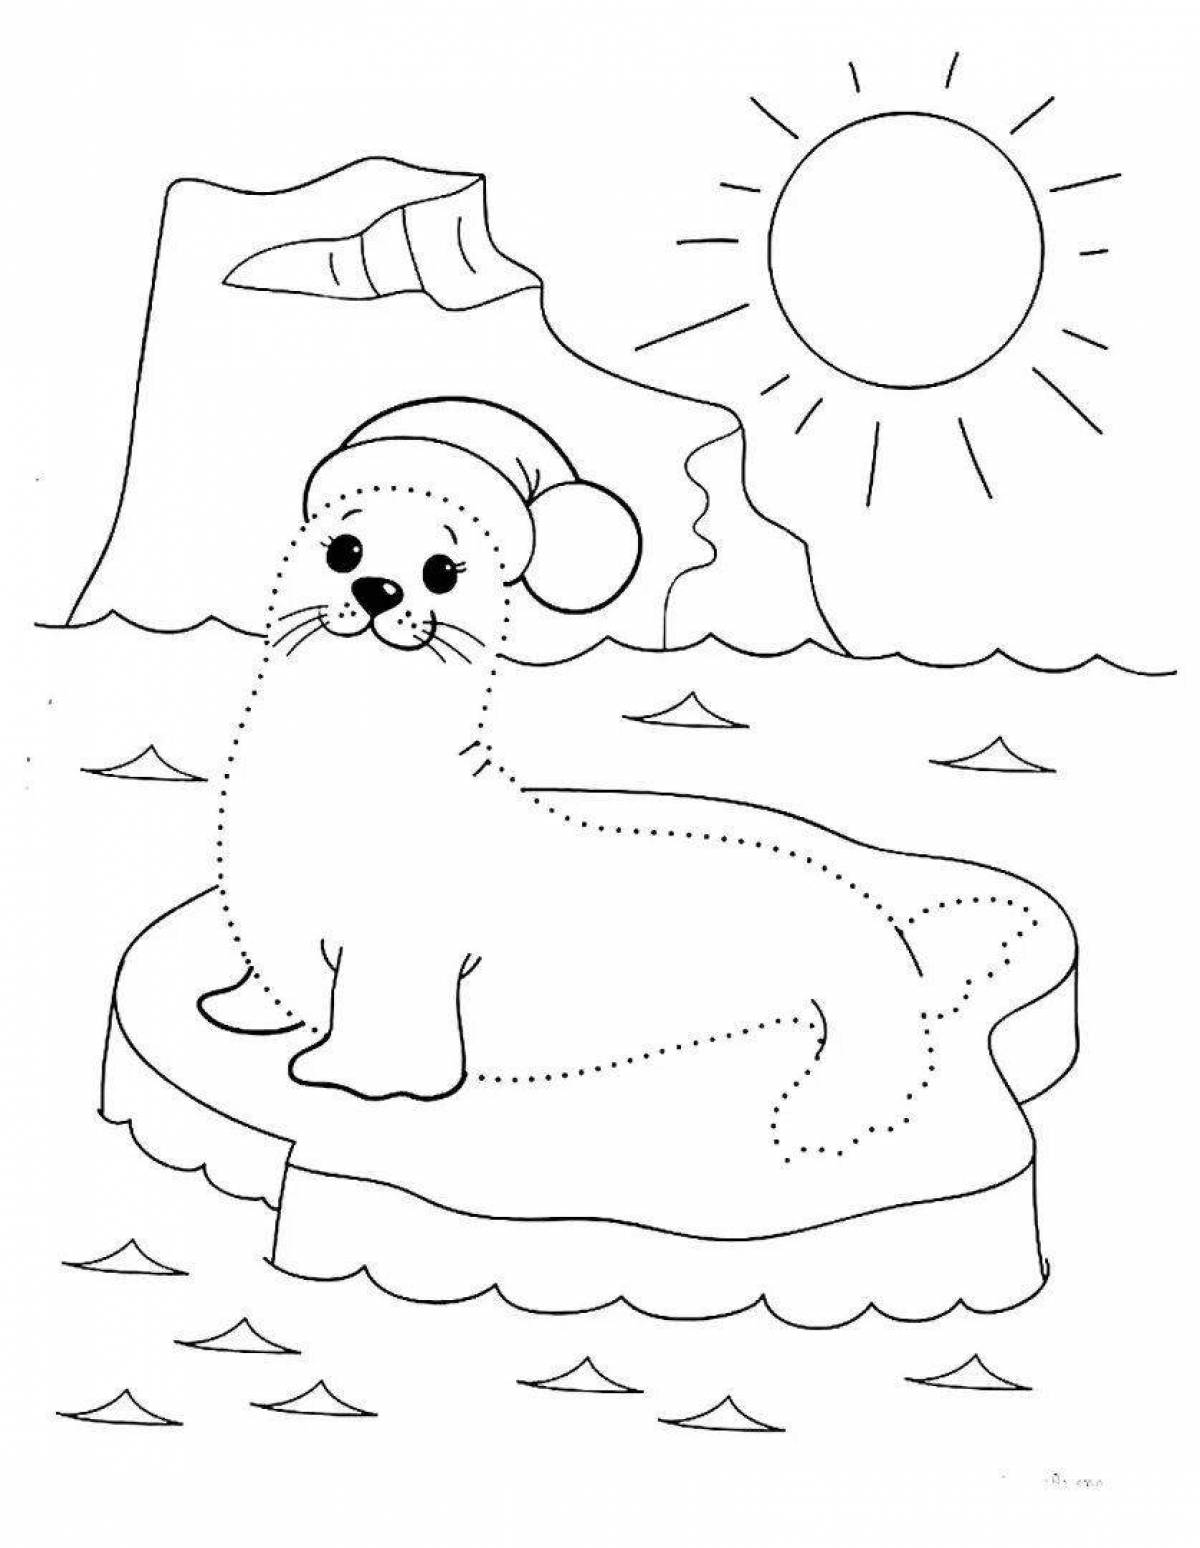 Children's Baikal seal coloring book